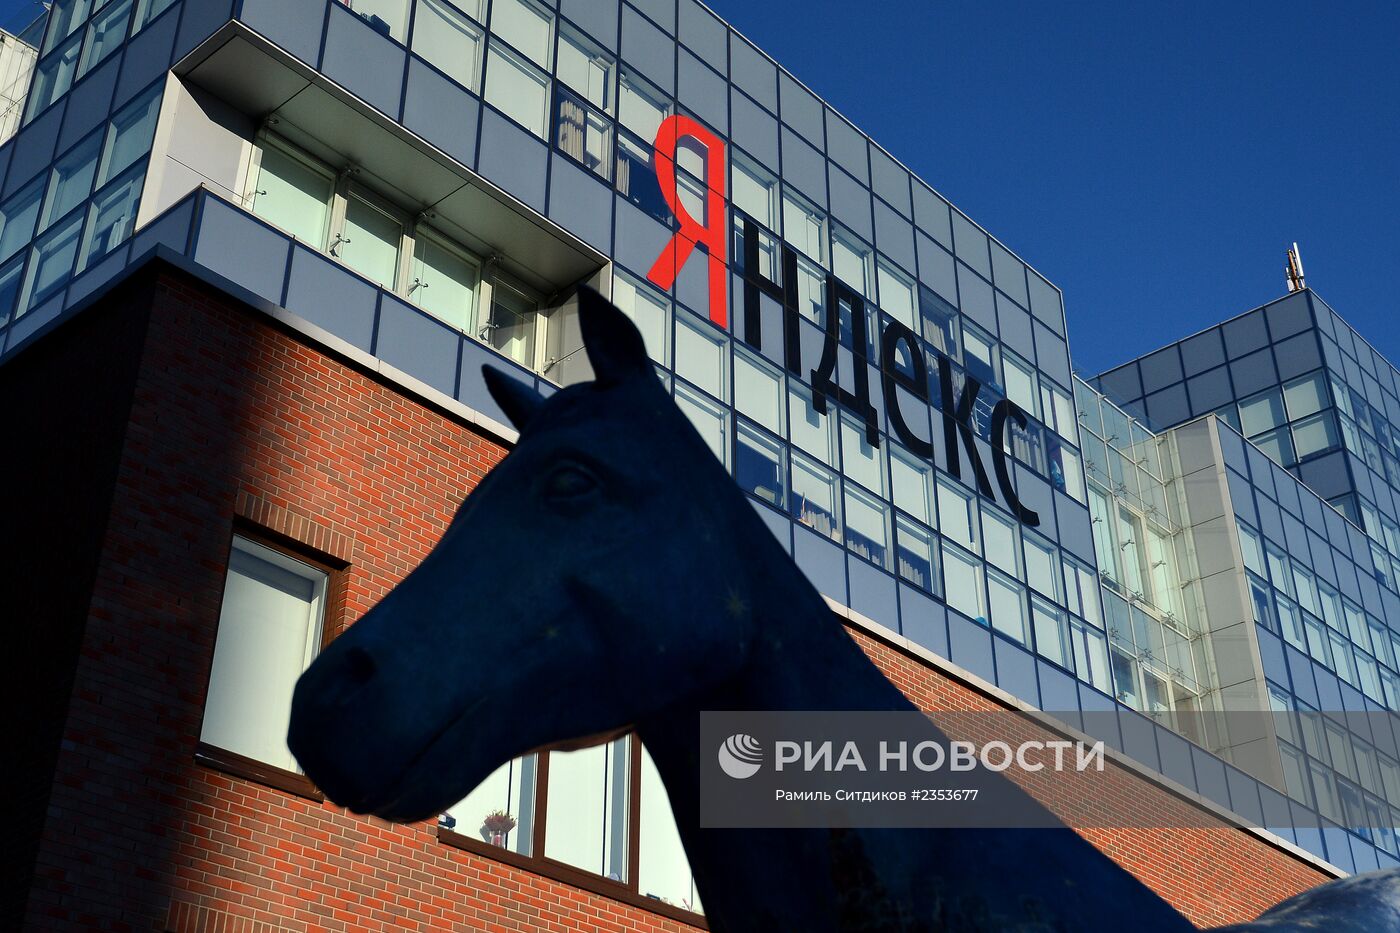 Офис интернет-компании "Яндекс"